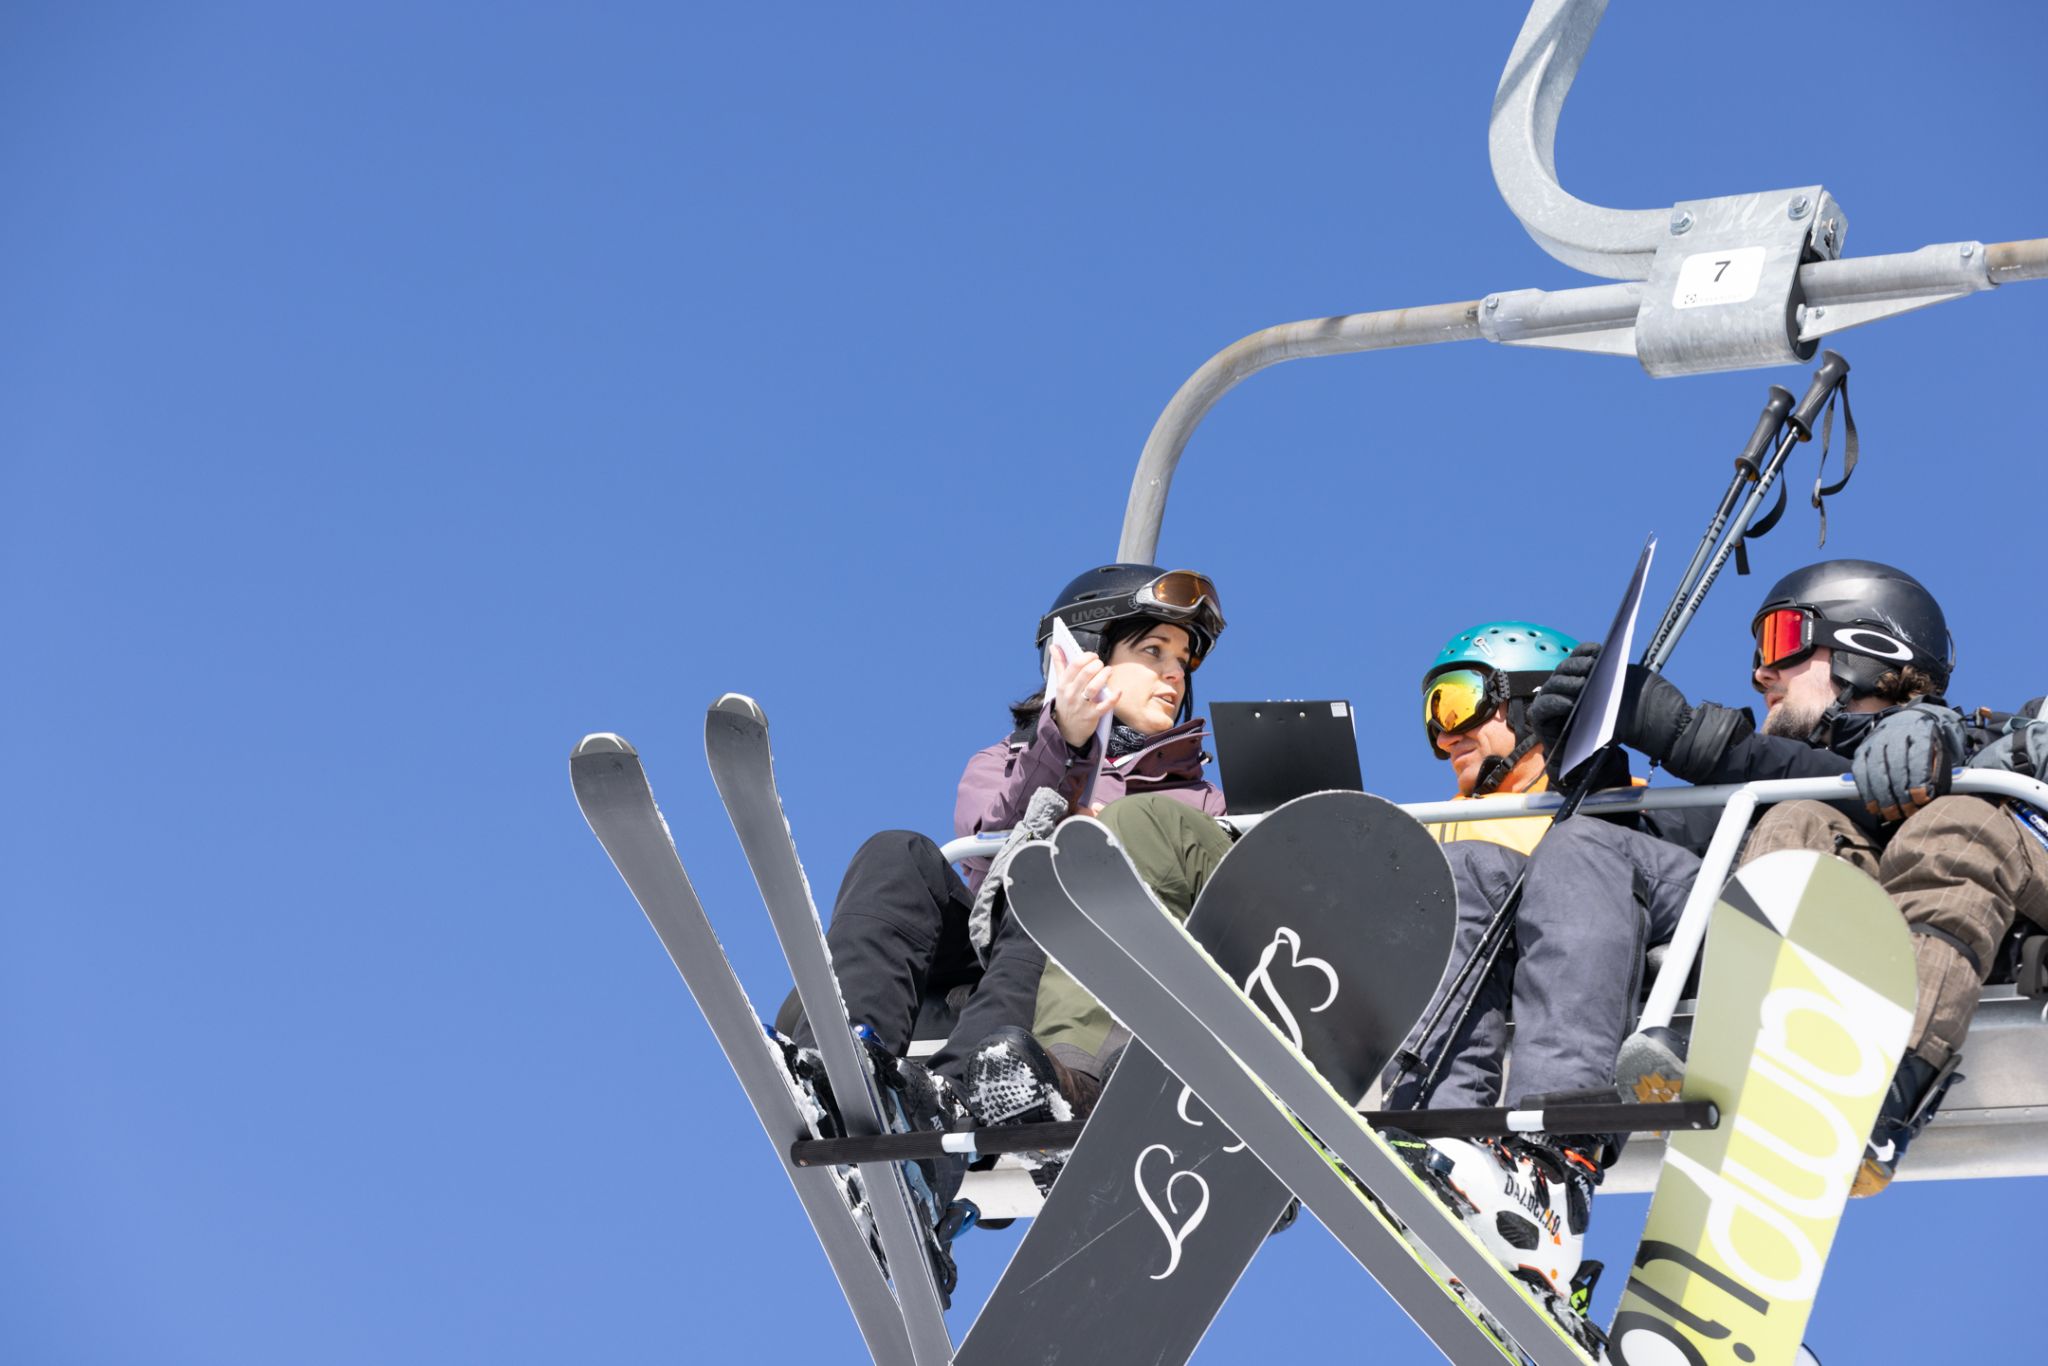 Skinnovation Lift Pitch Skiing Startup